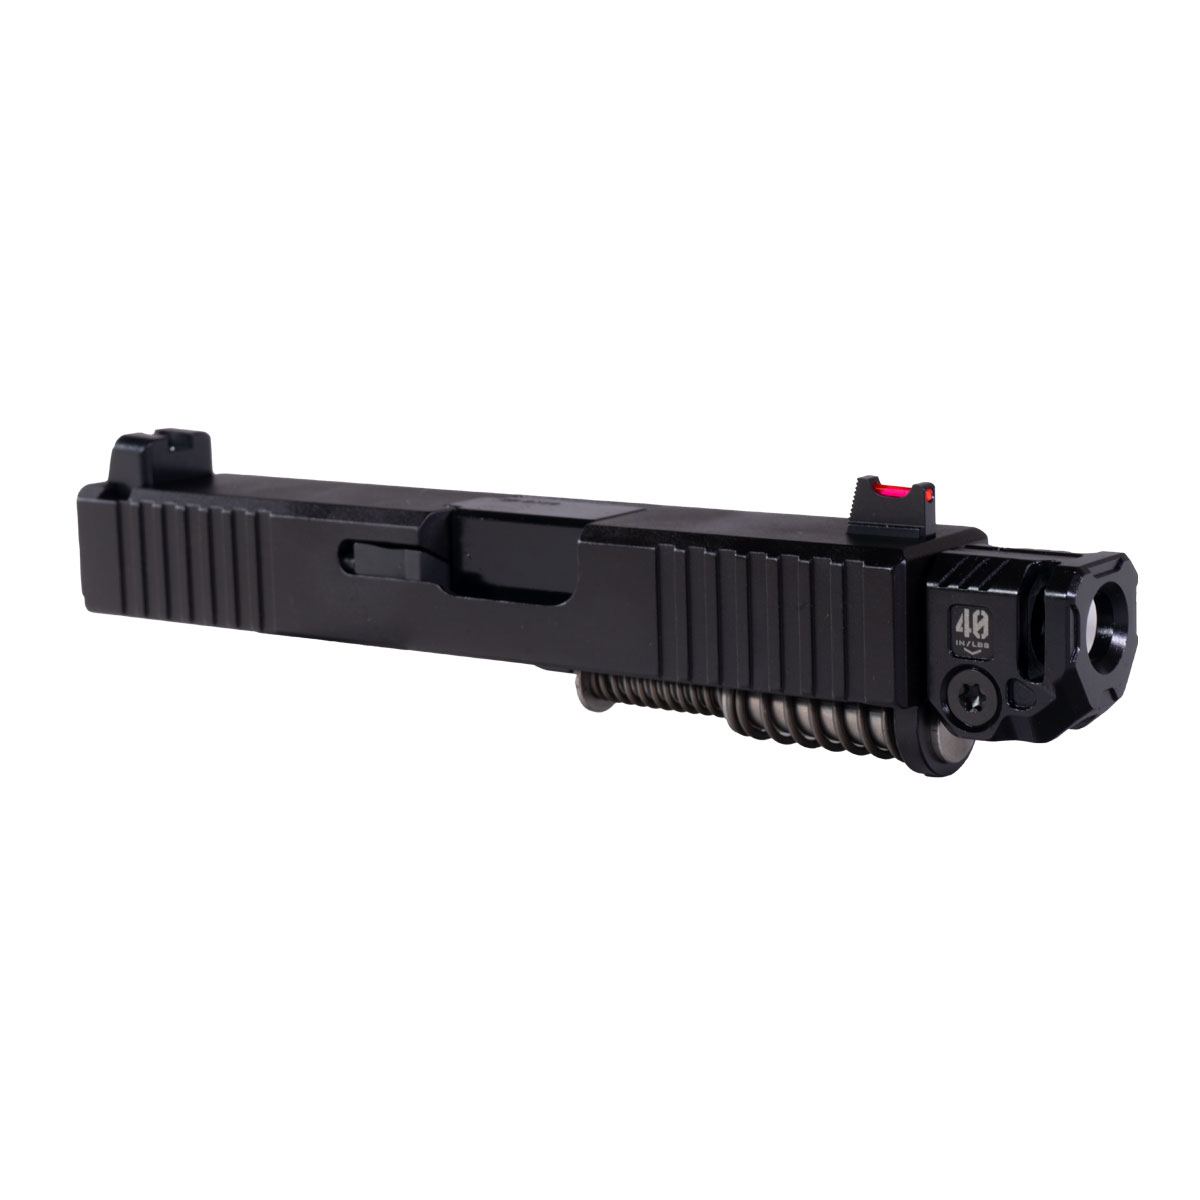 DD 'Twenty-six w/ Strike Industries Compensator' 9mm Complete Slide Kit - Glock 26 Gen 1-2 Compatible